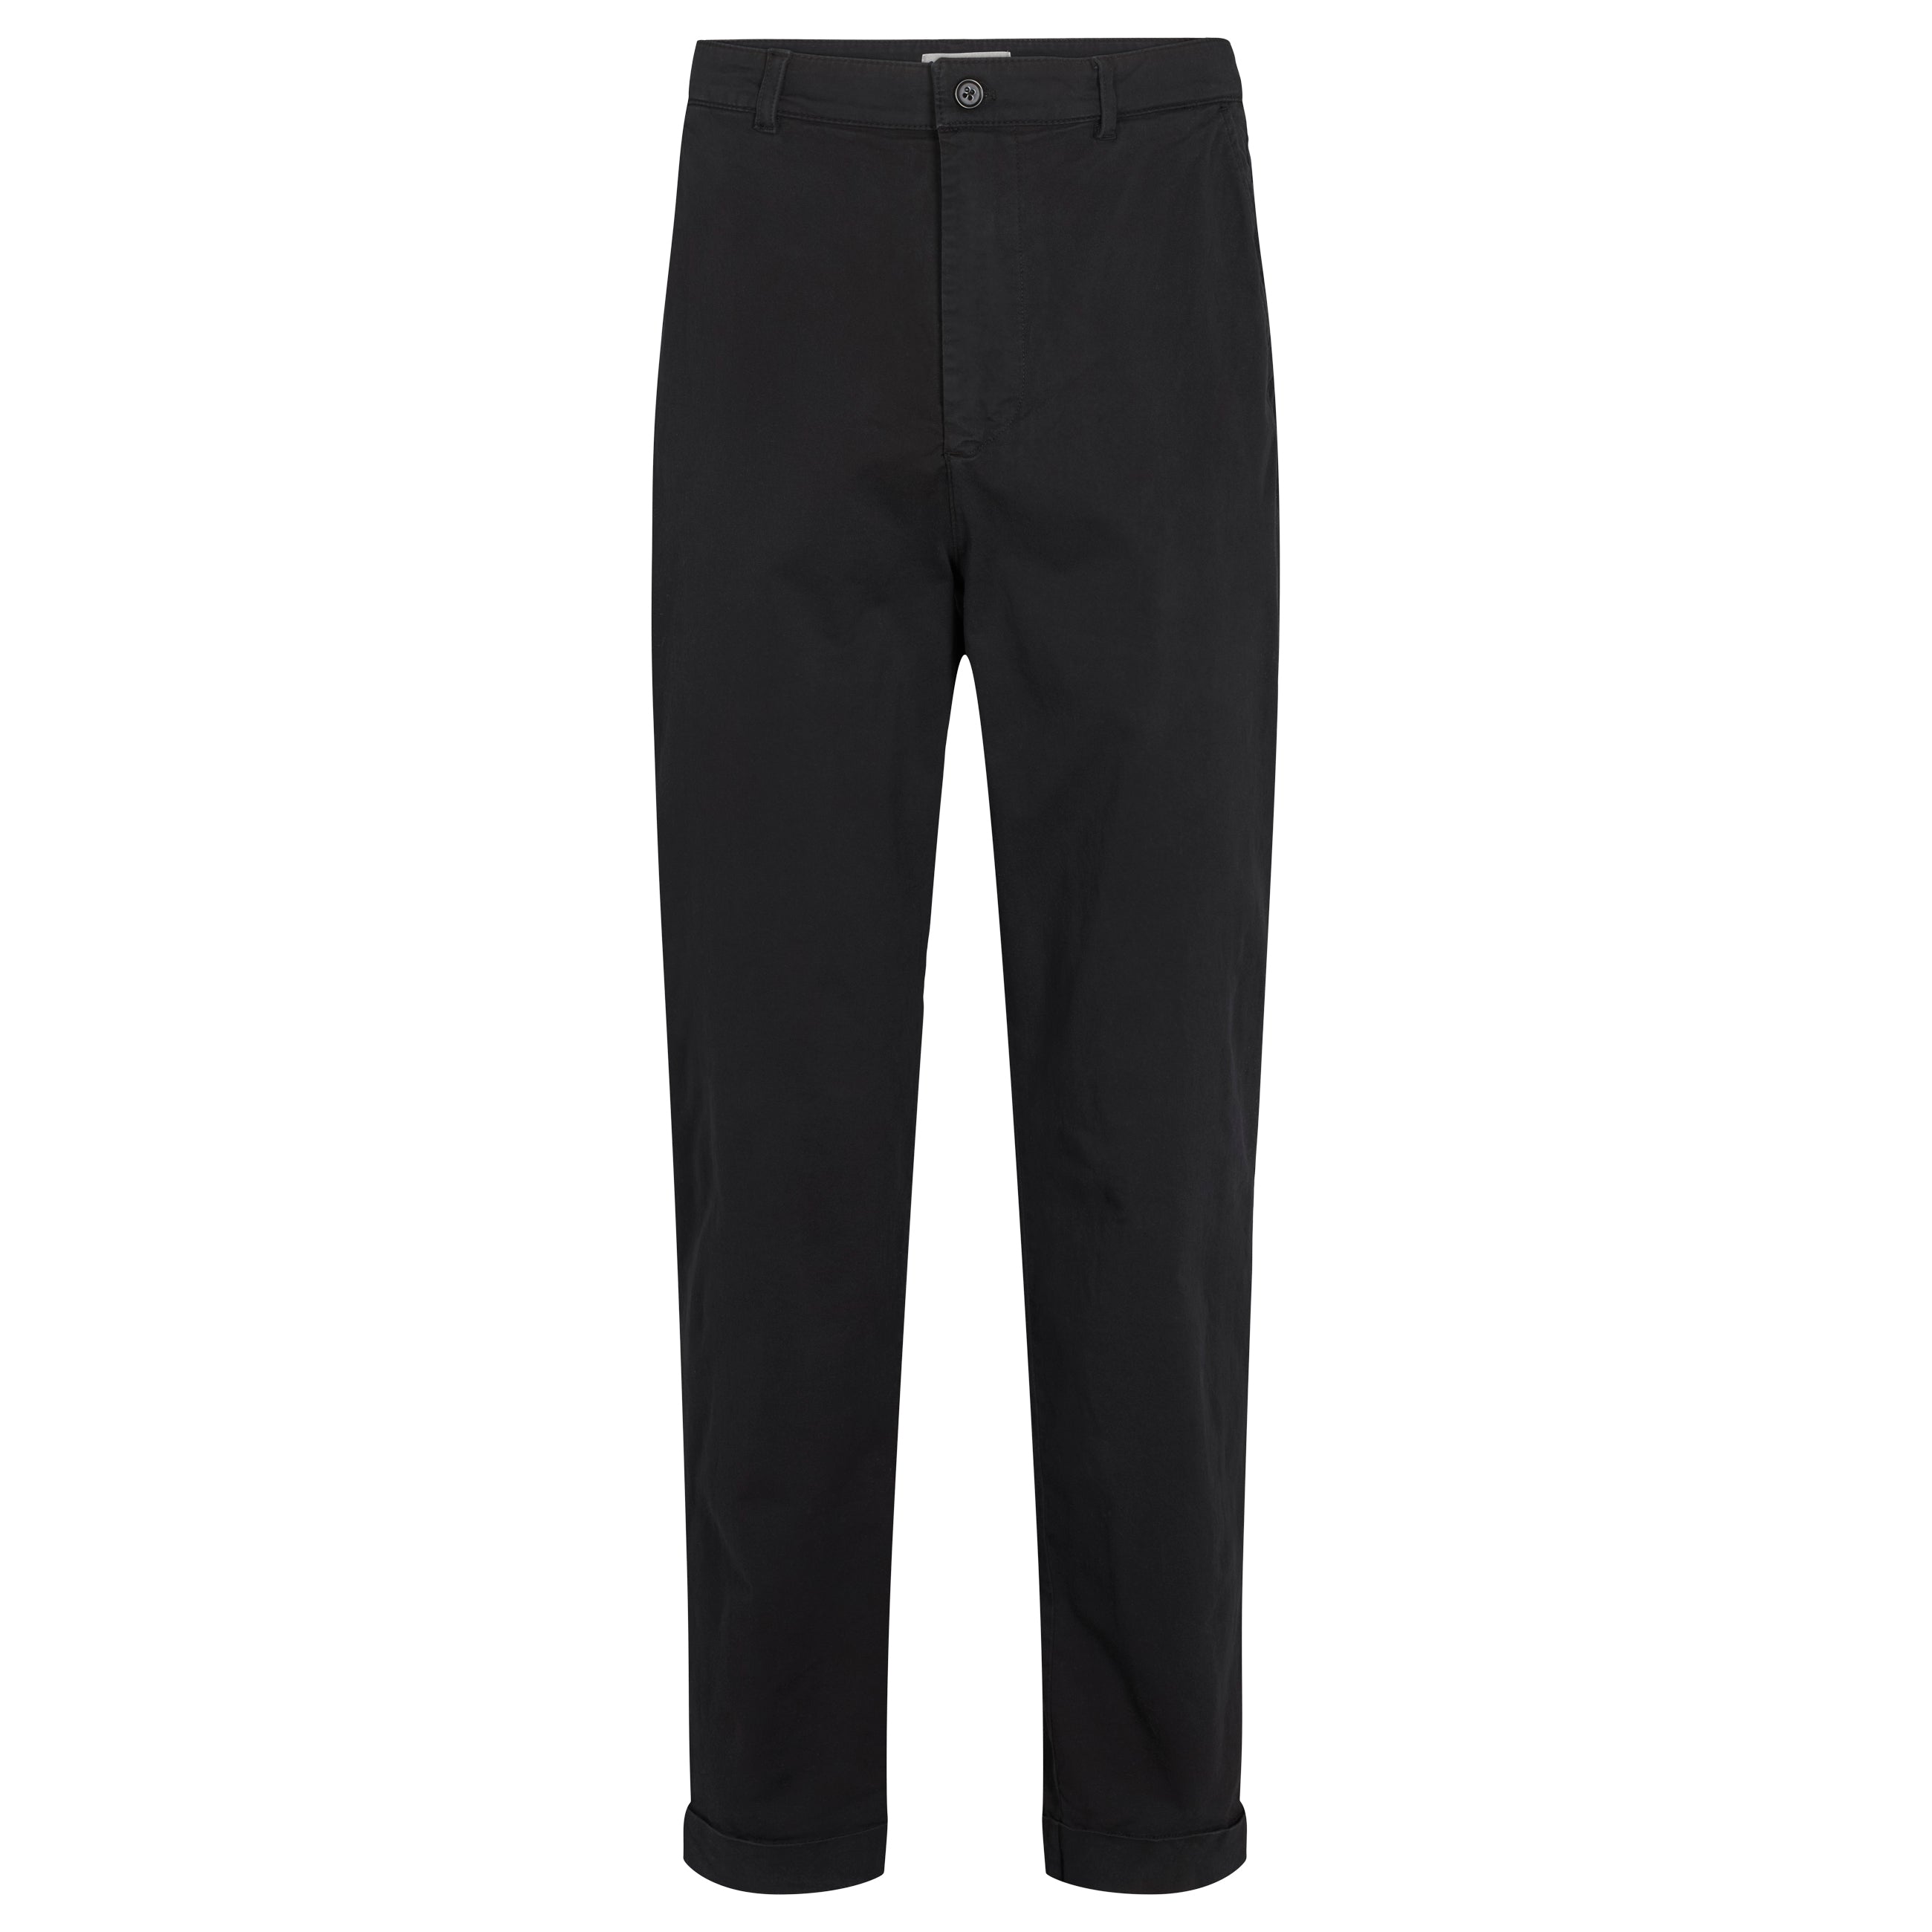 By Garment Makers Filip Organic Cotton Pant Pants 1204 Jet Black